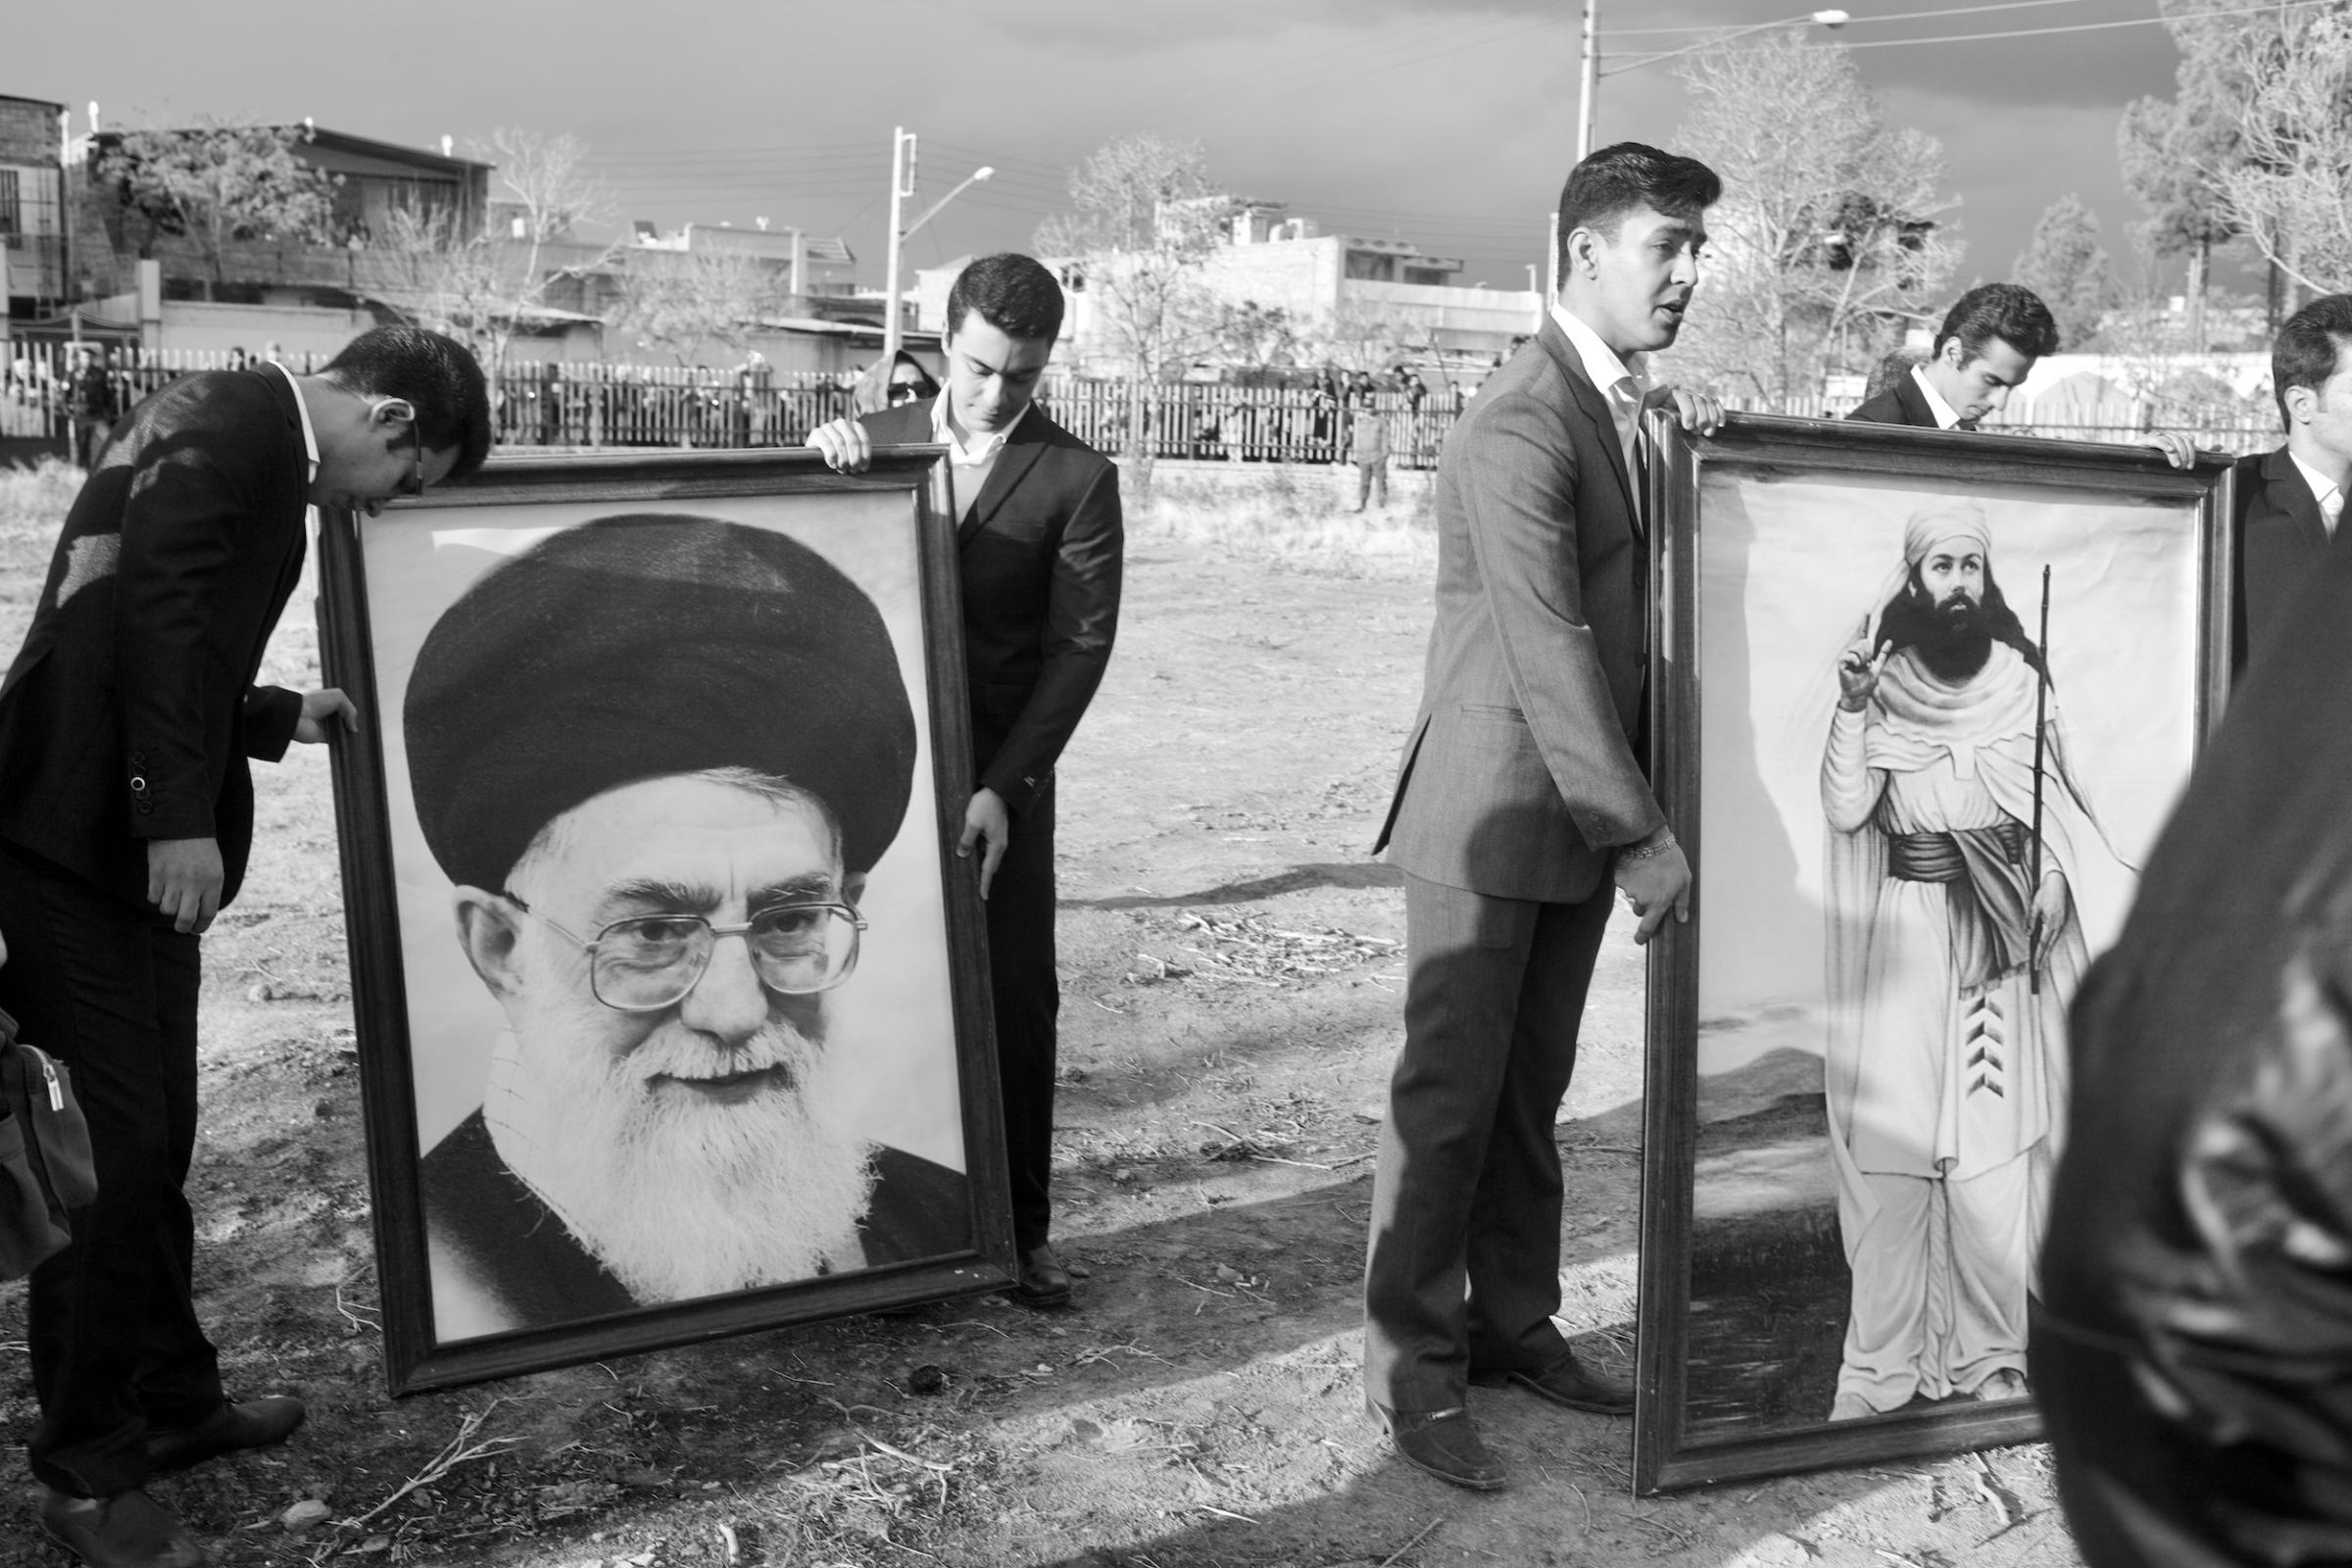 Iraniyat ("being Iranian") -    An Image of Ayatollah Khamenei, the supreme leader of...